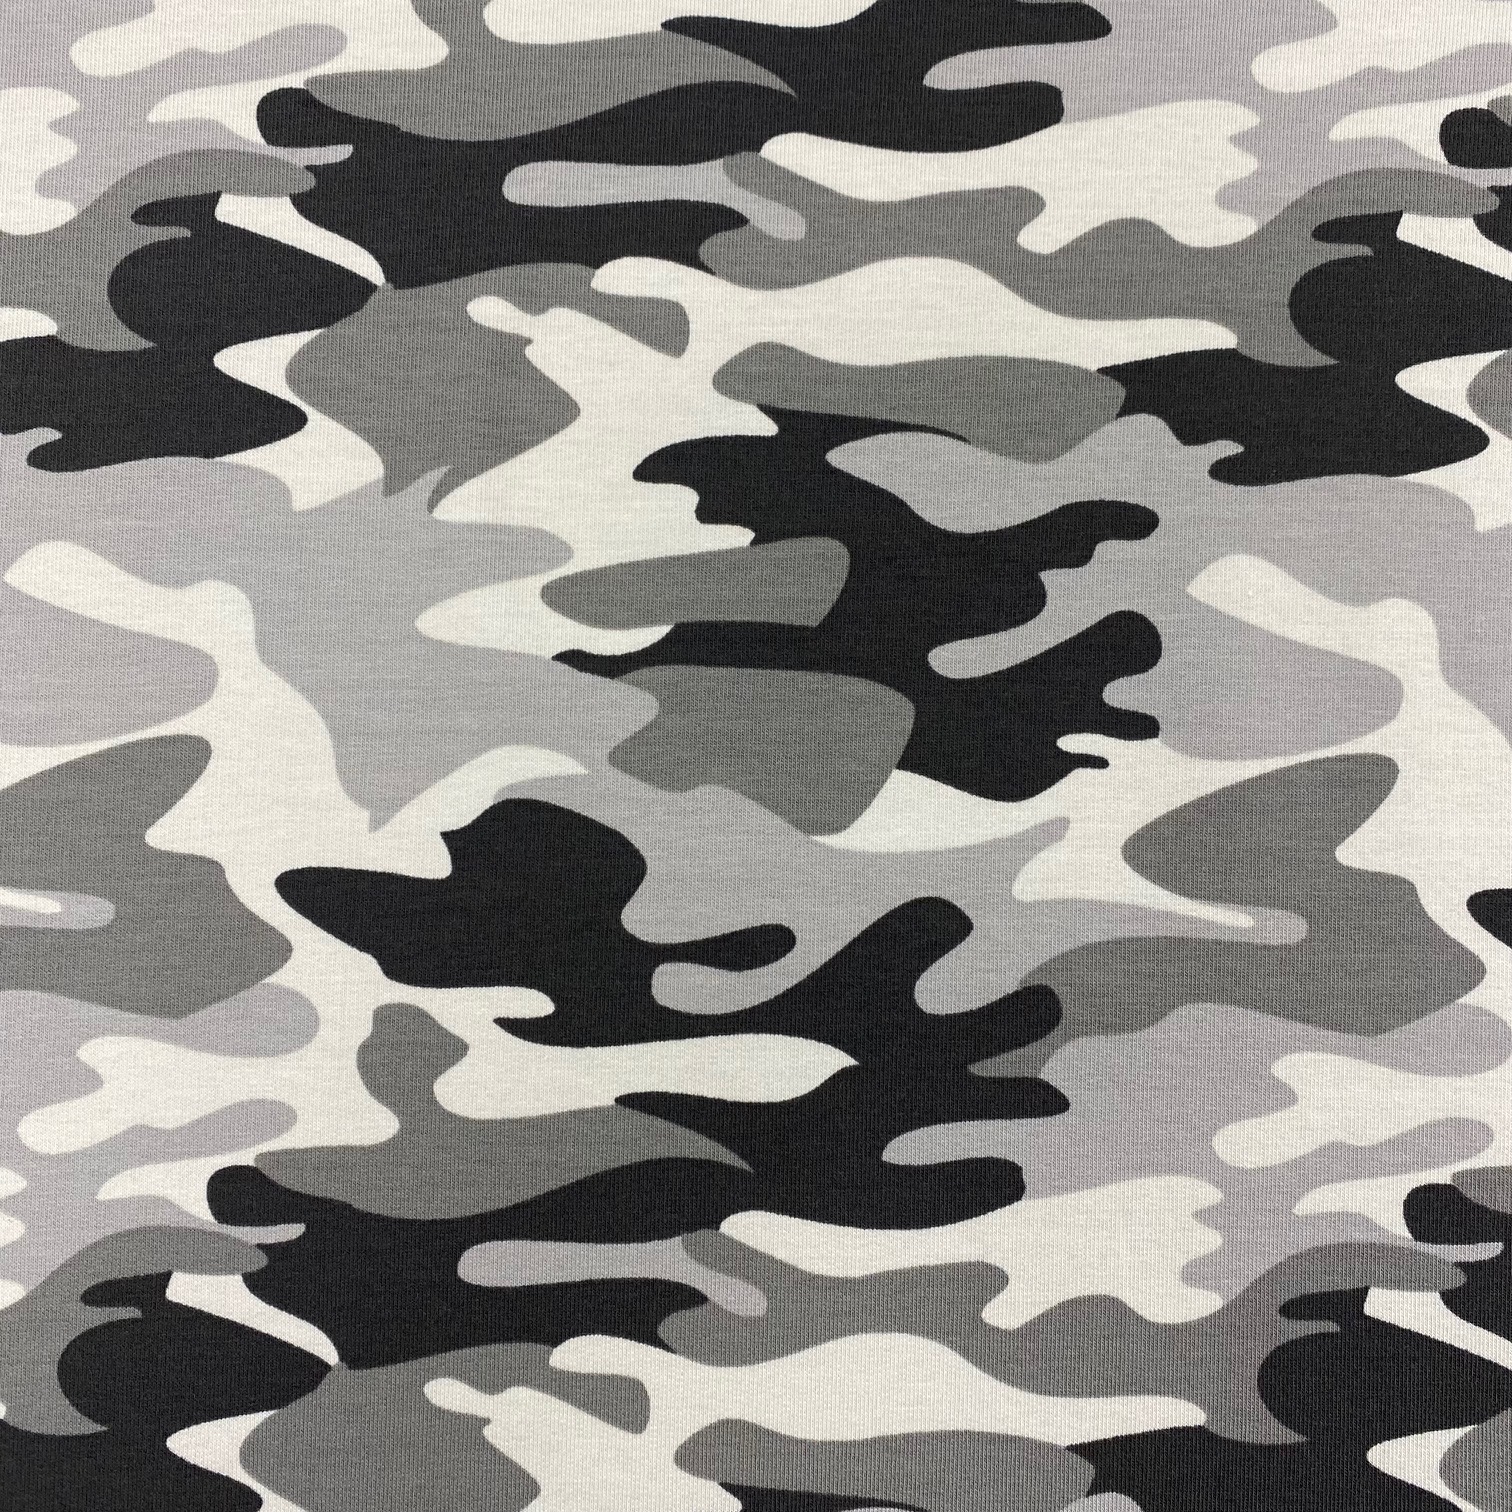 Sweat French Terry, angeraut, Camouflage dunkelgrau/beige.  Art. 4979-1264